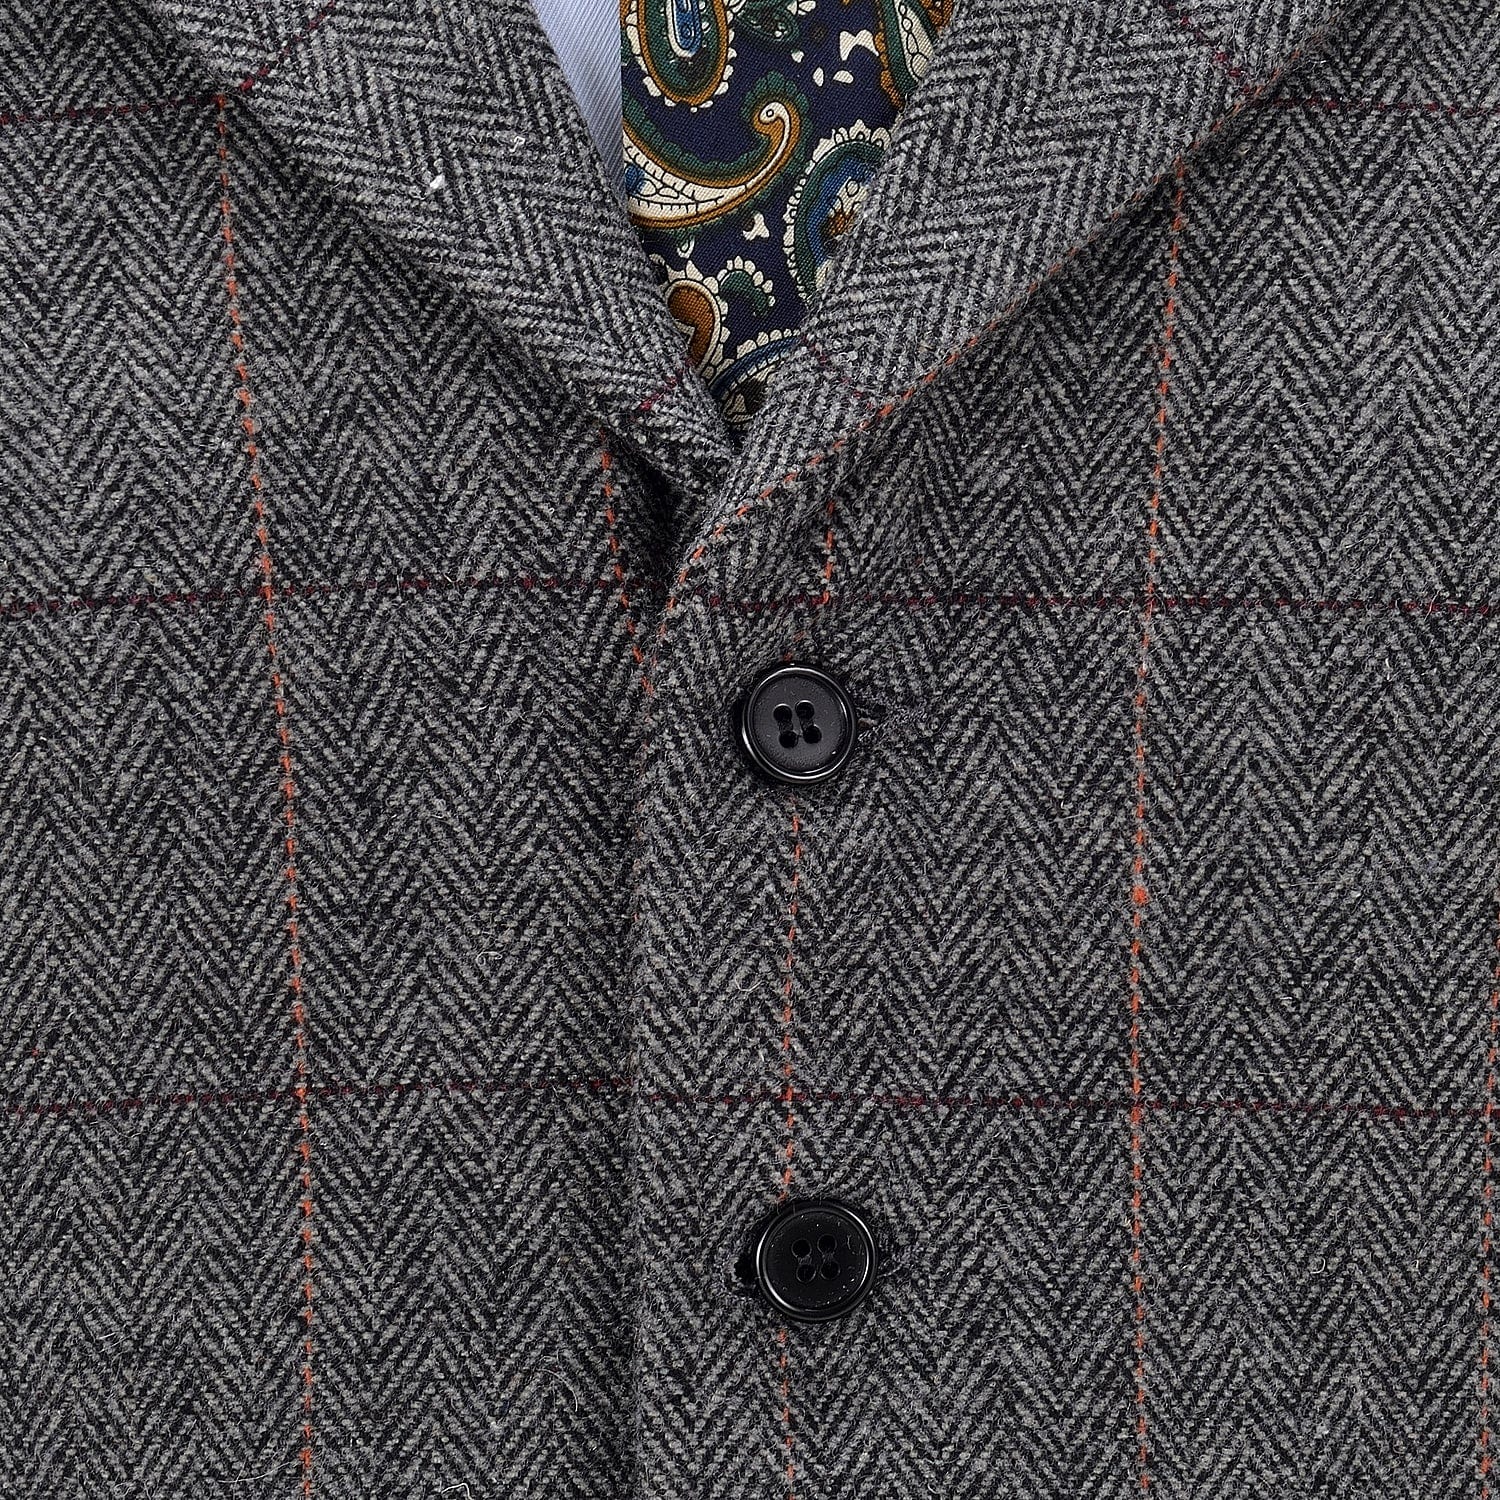 ceehuteey Men's Classic Fashion Notch Lapel pinstripe Waistcoat